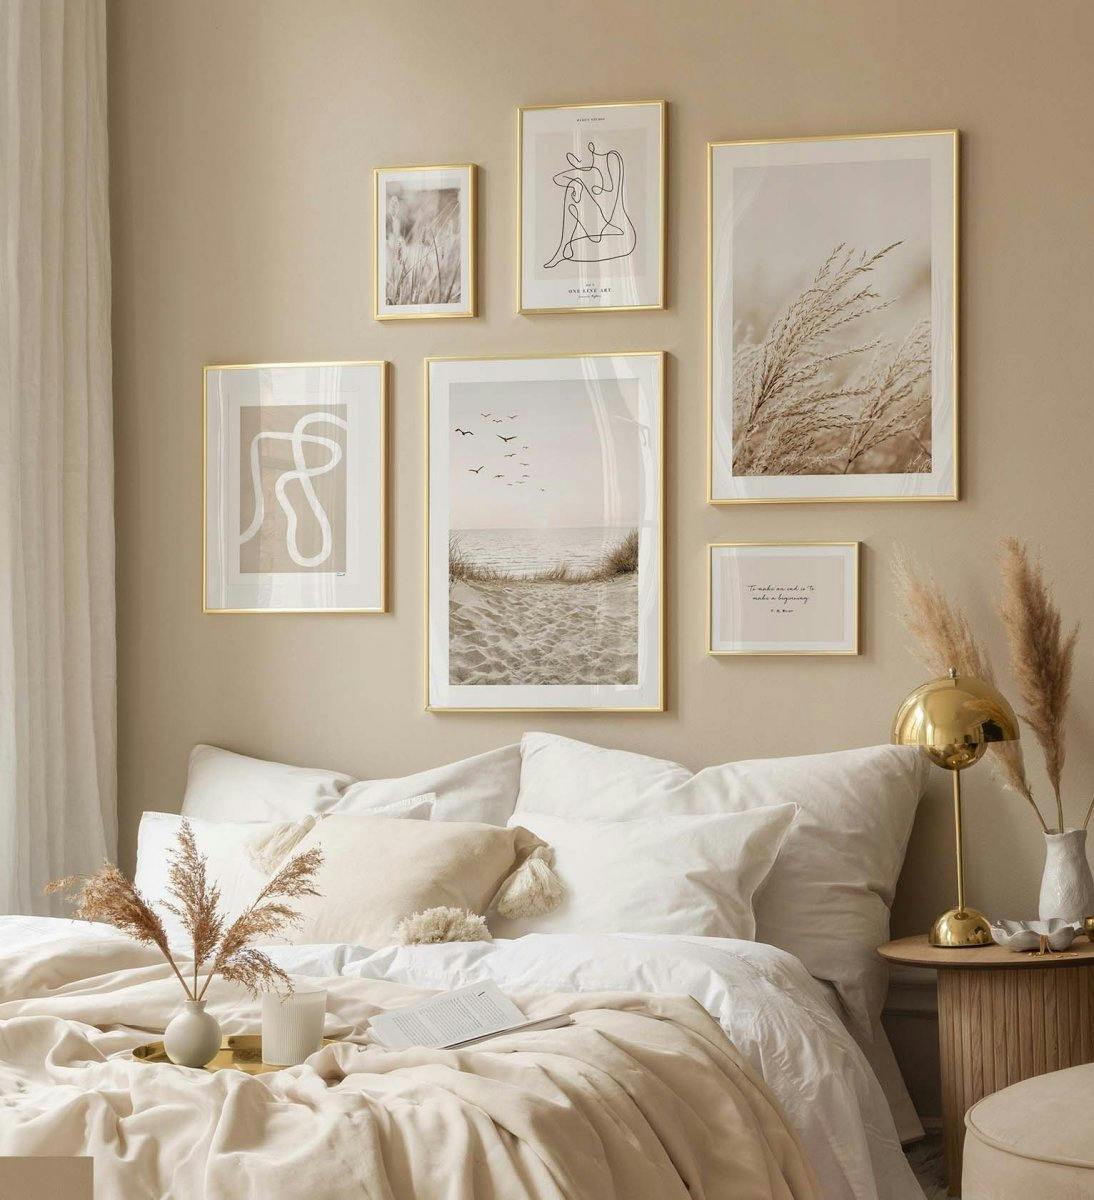 Sandy beach vibes in beige tones for the bedroom